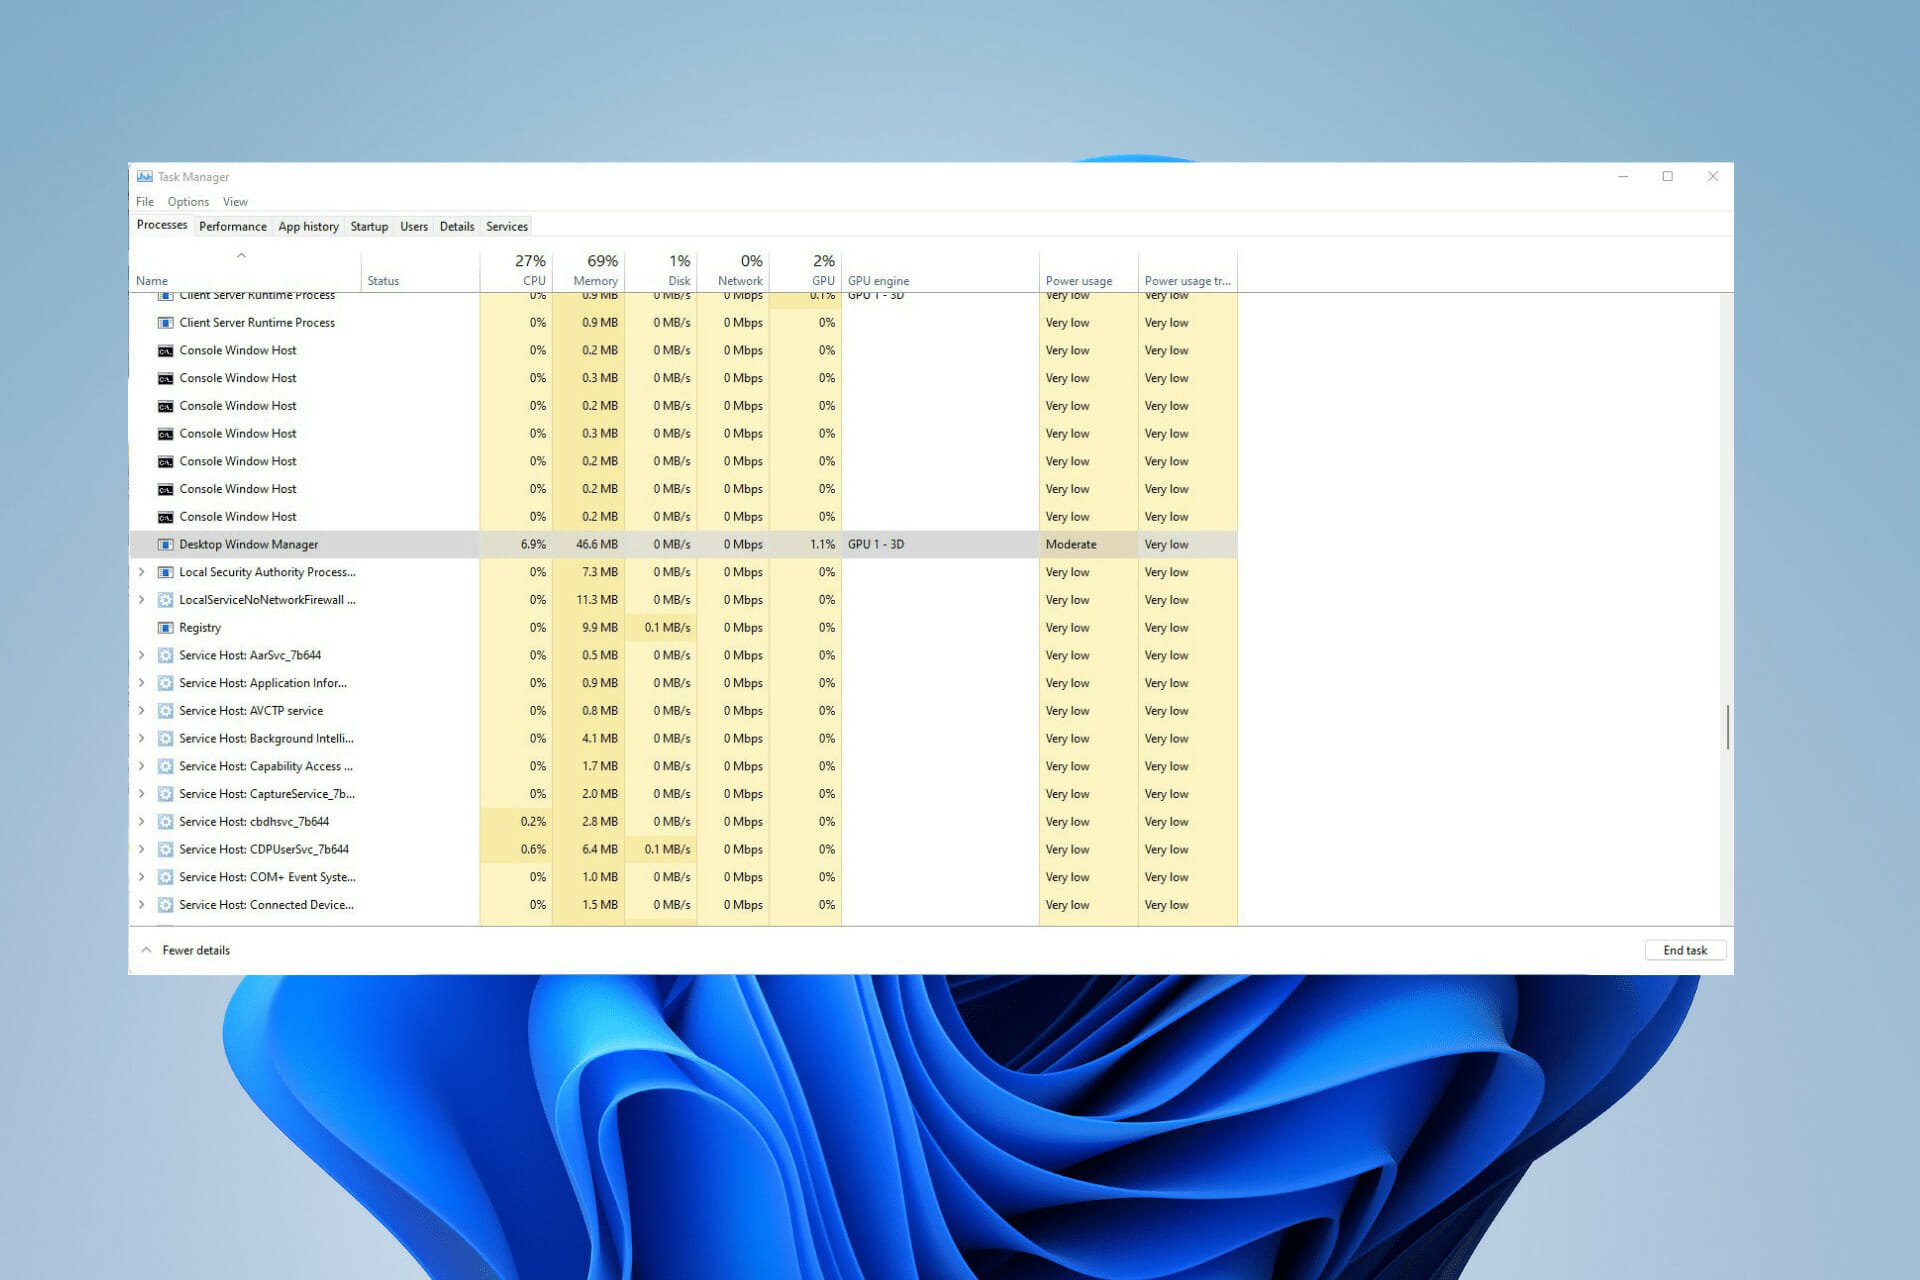 Desktop Window Manager High GPU: Fix It in 5 Quick Ways